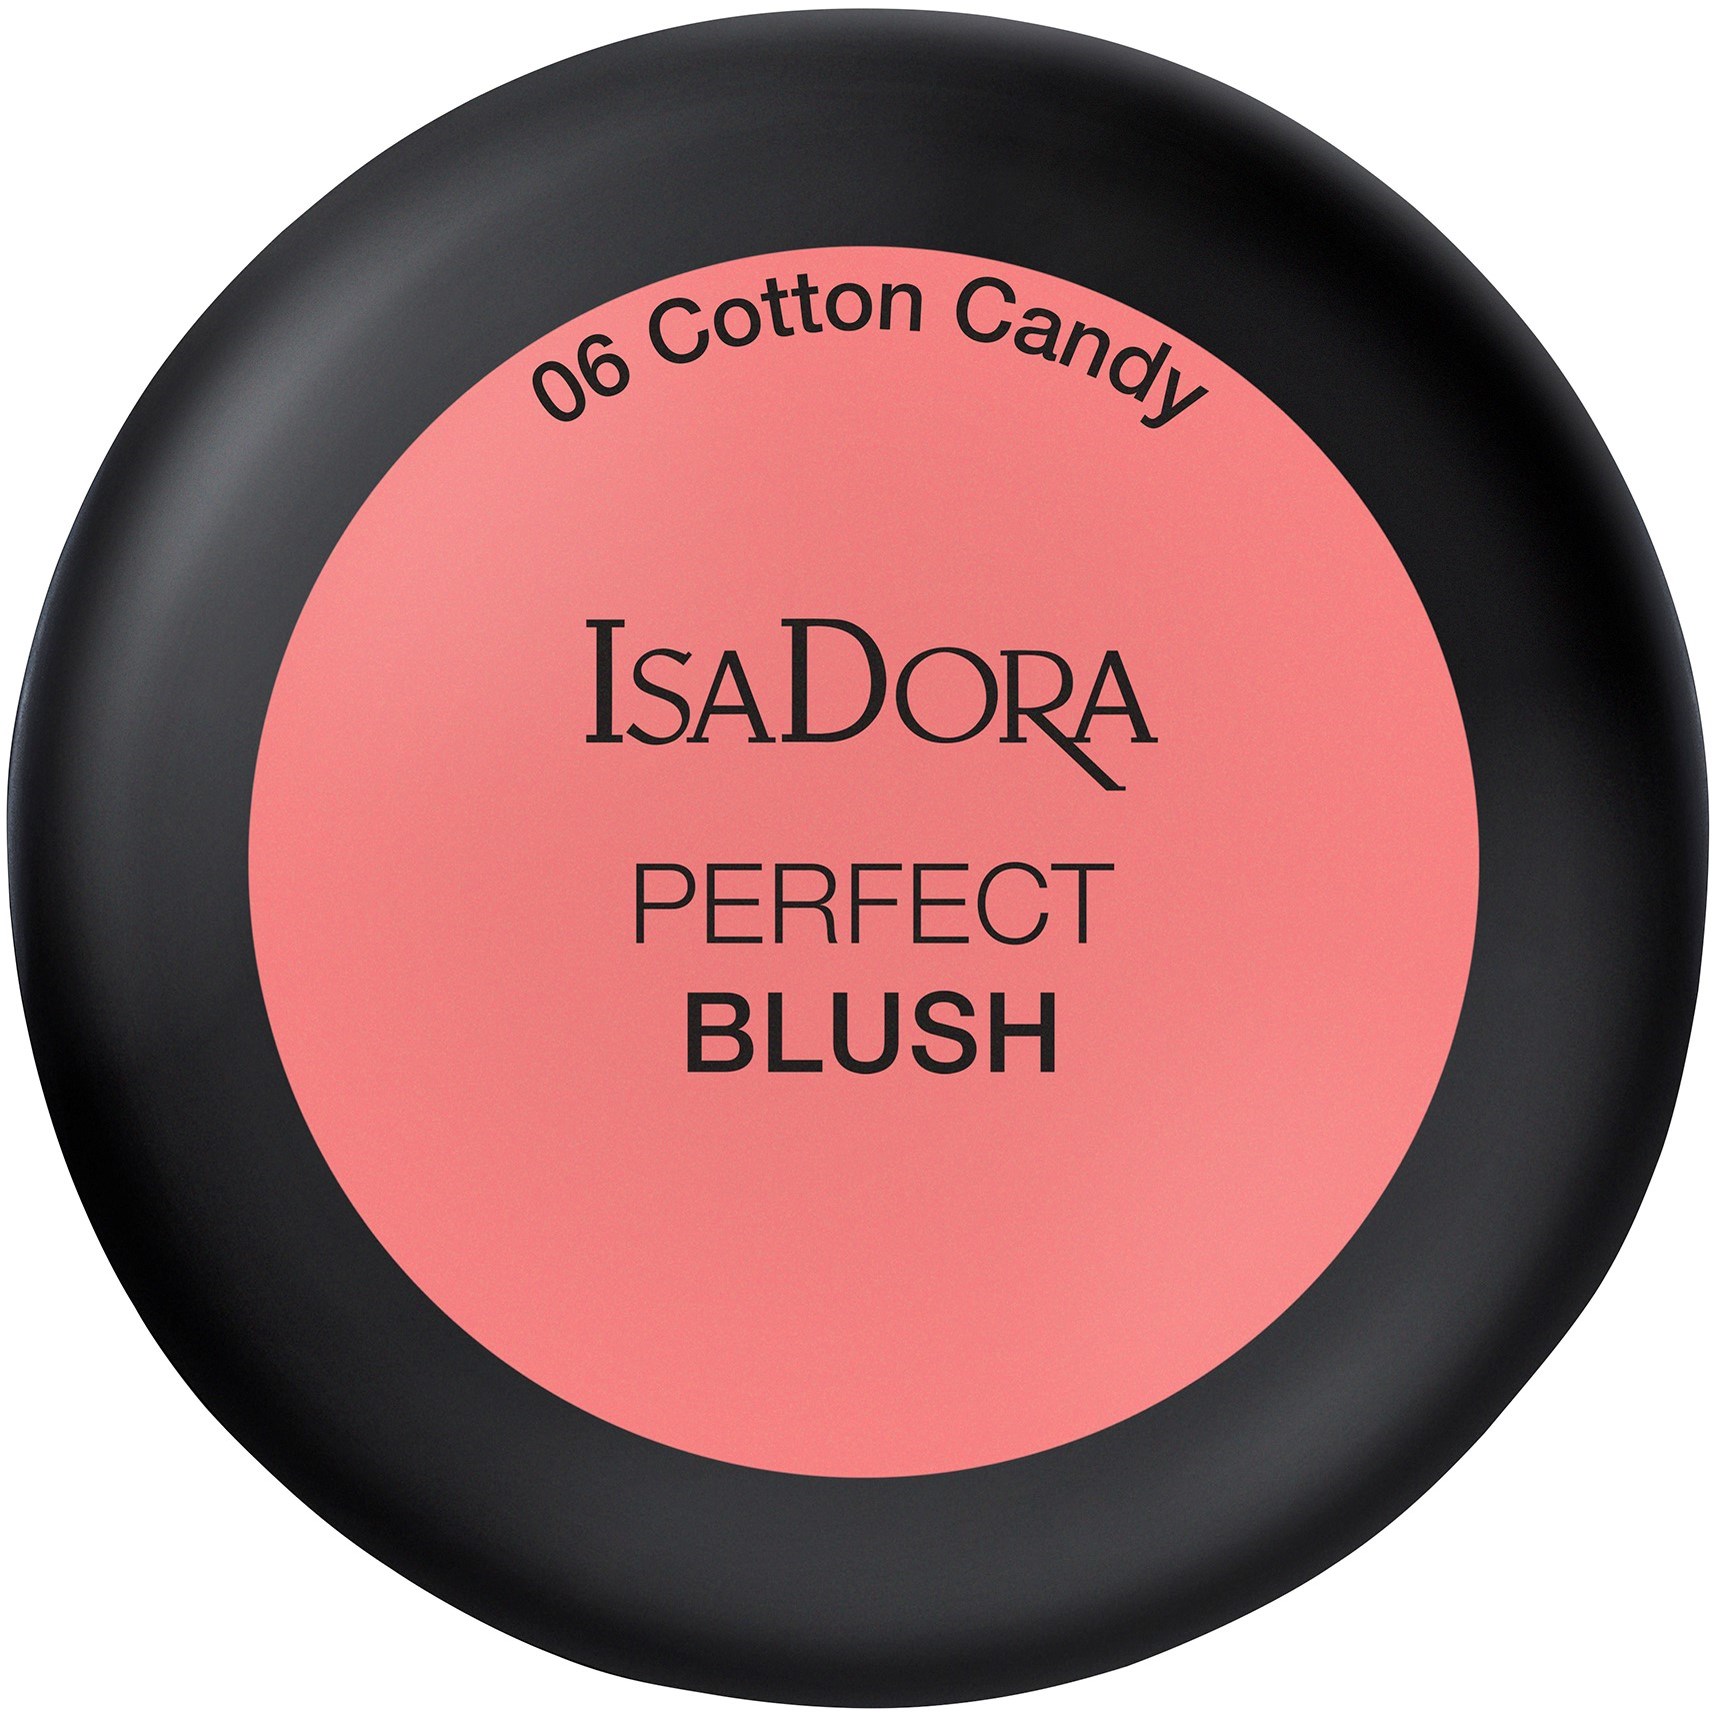 Läs mer om IsaDora Perfect Blush 6 Cotton Candy